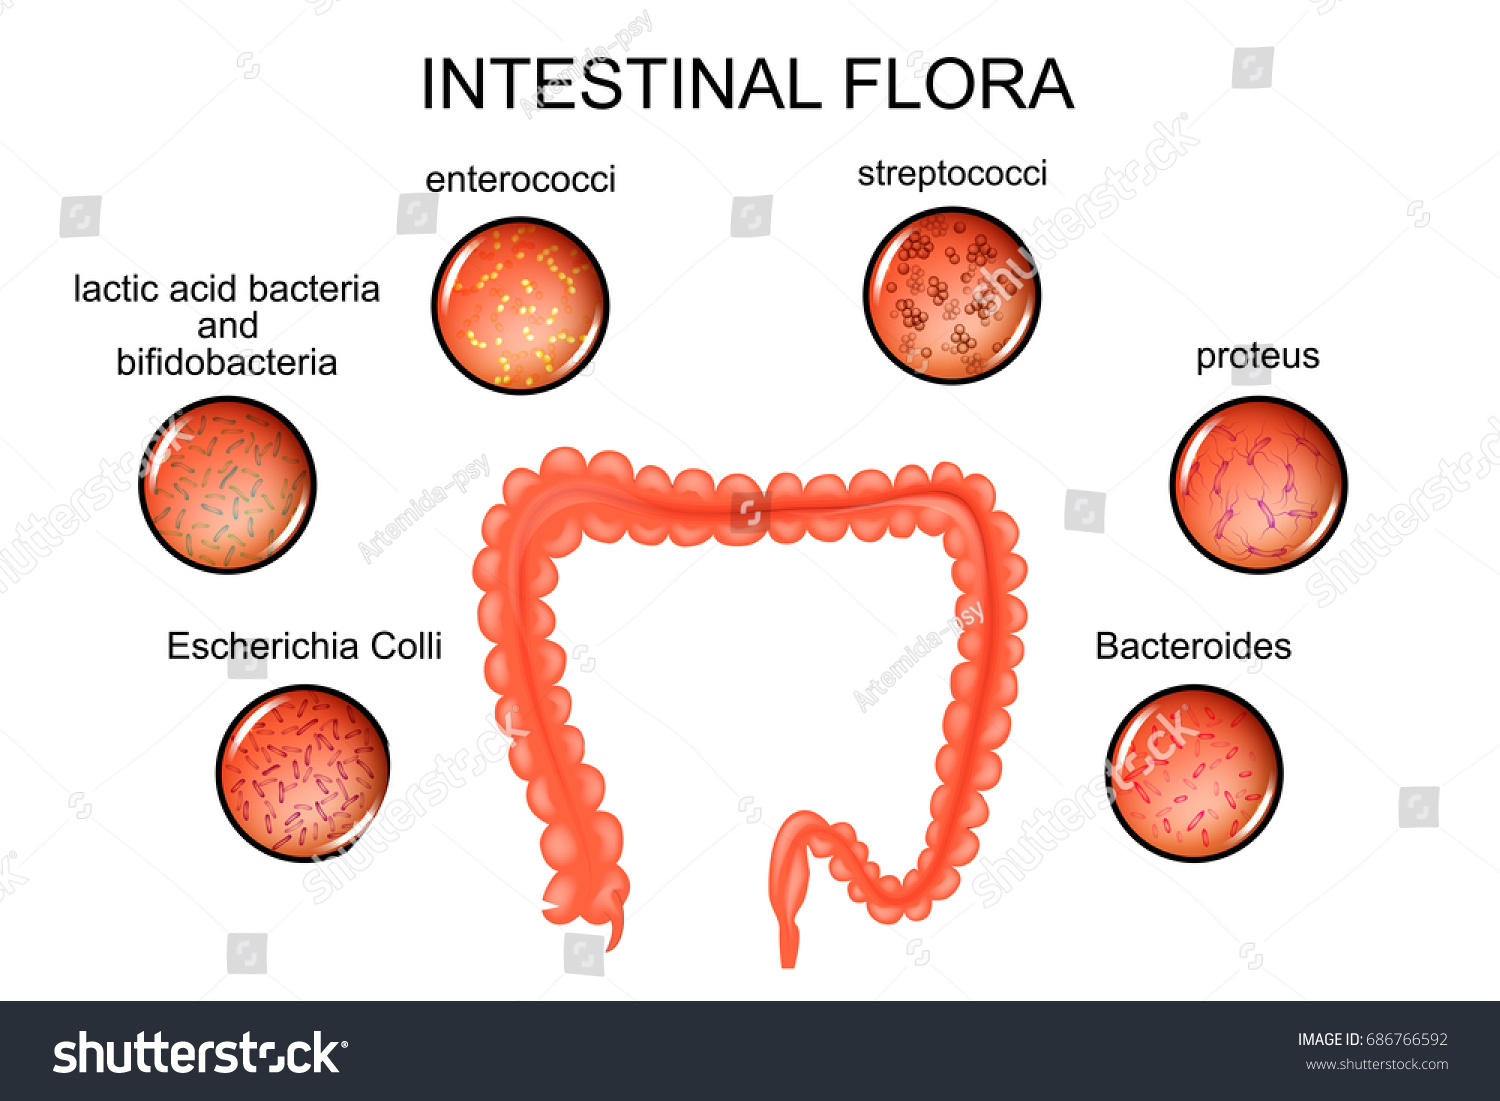 Flora mixta intestinal